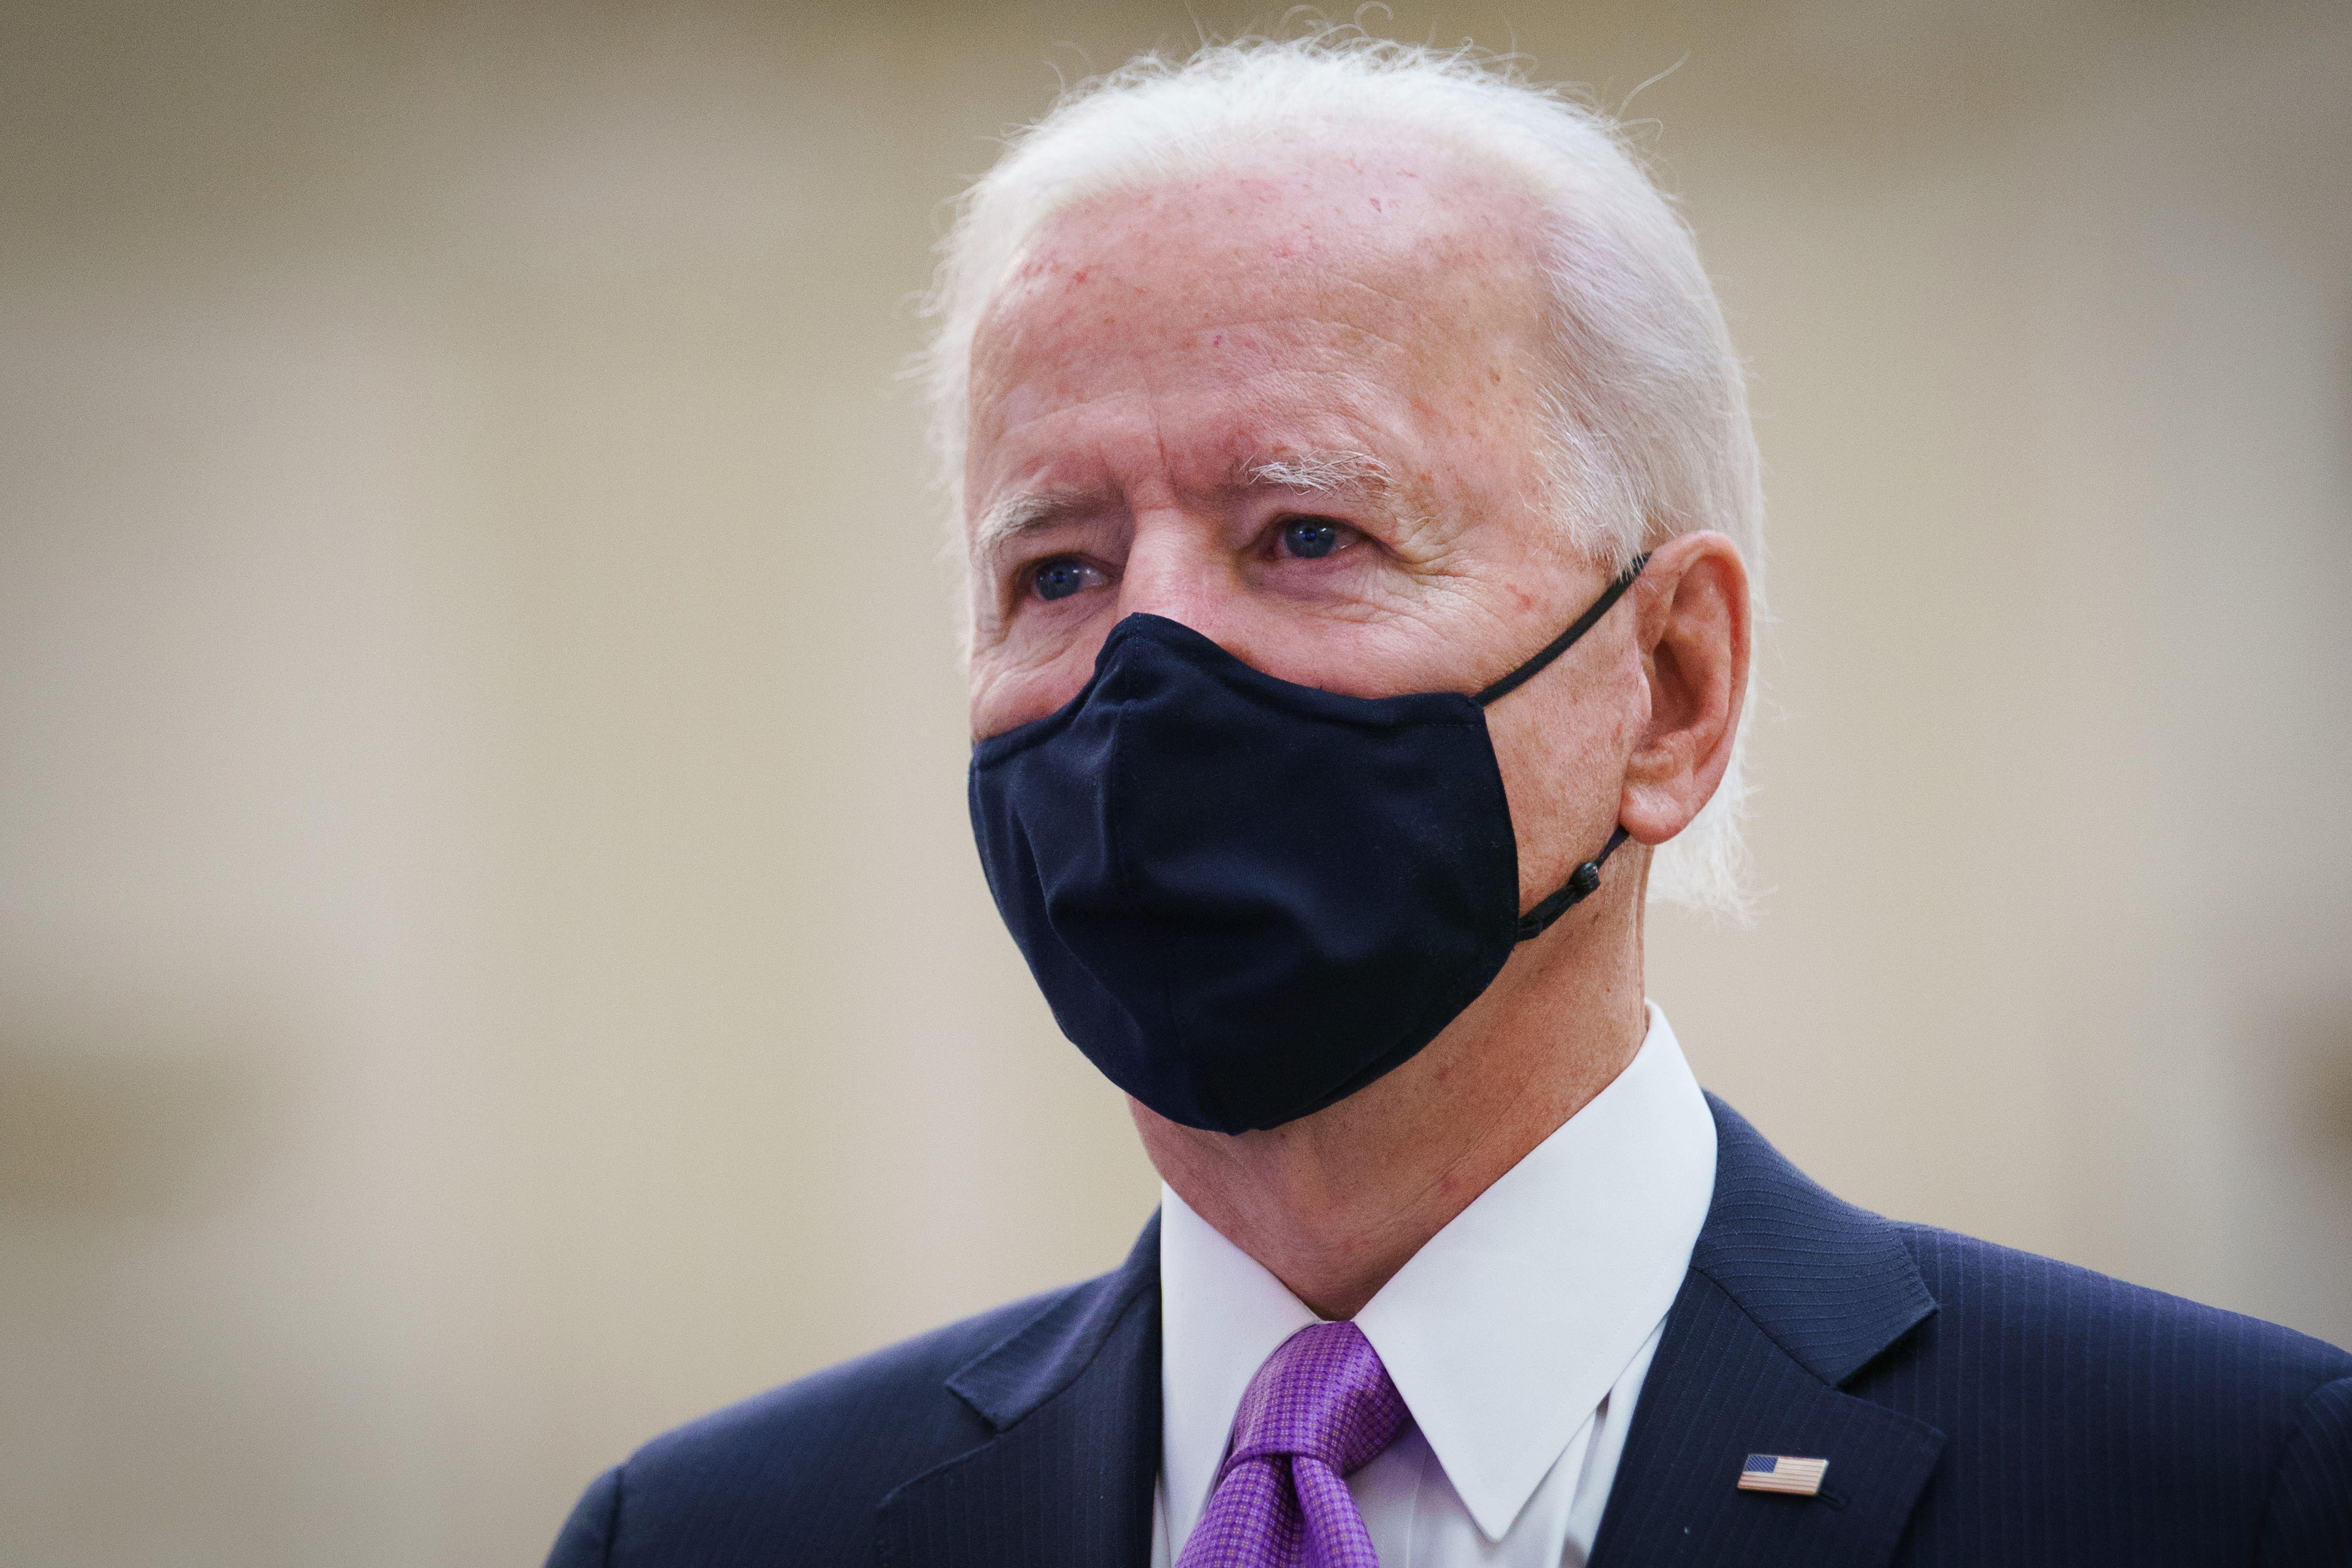 Biden wearing a black mask